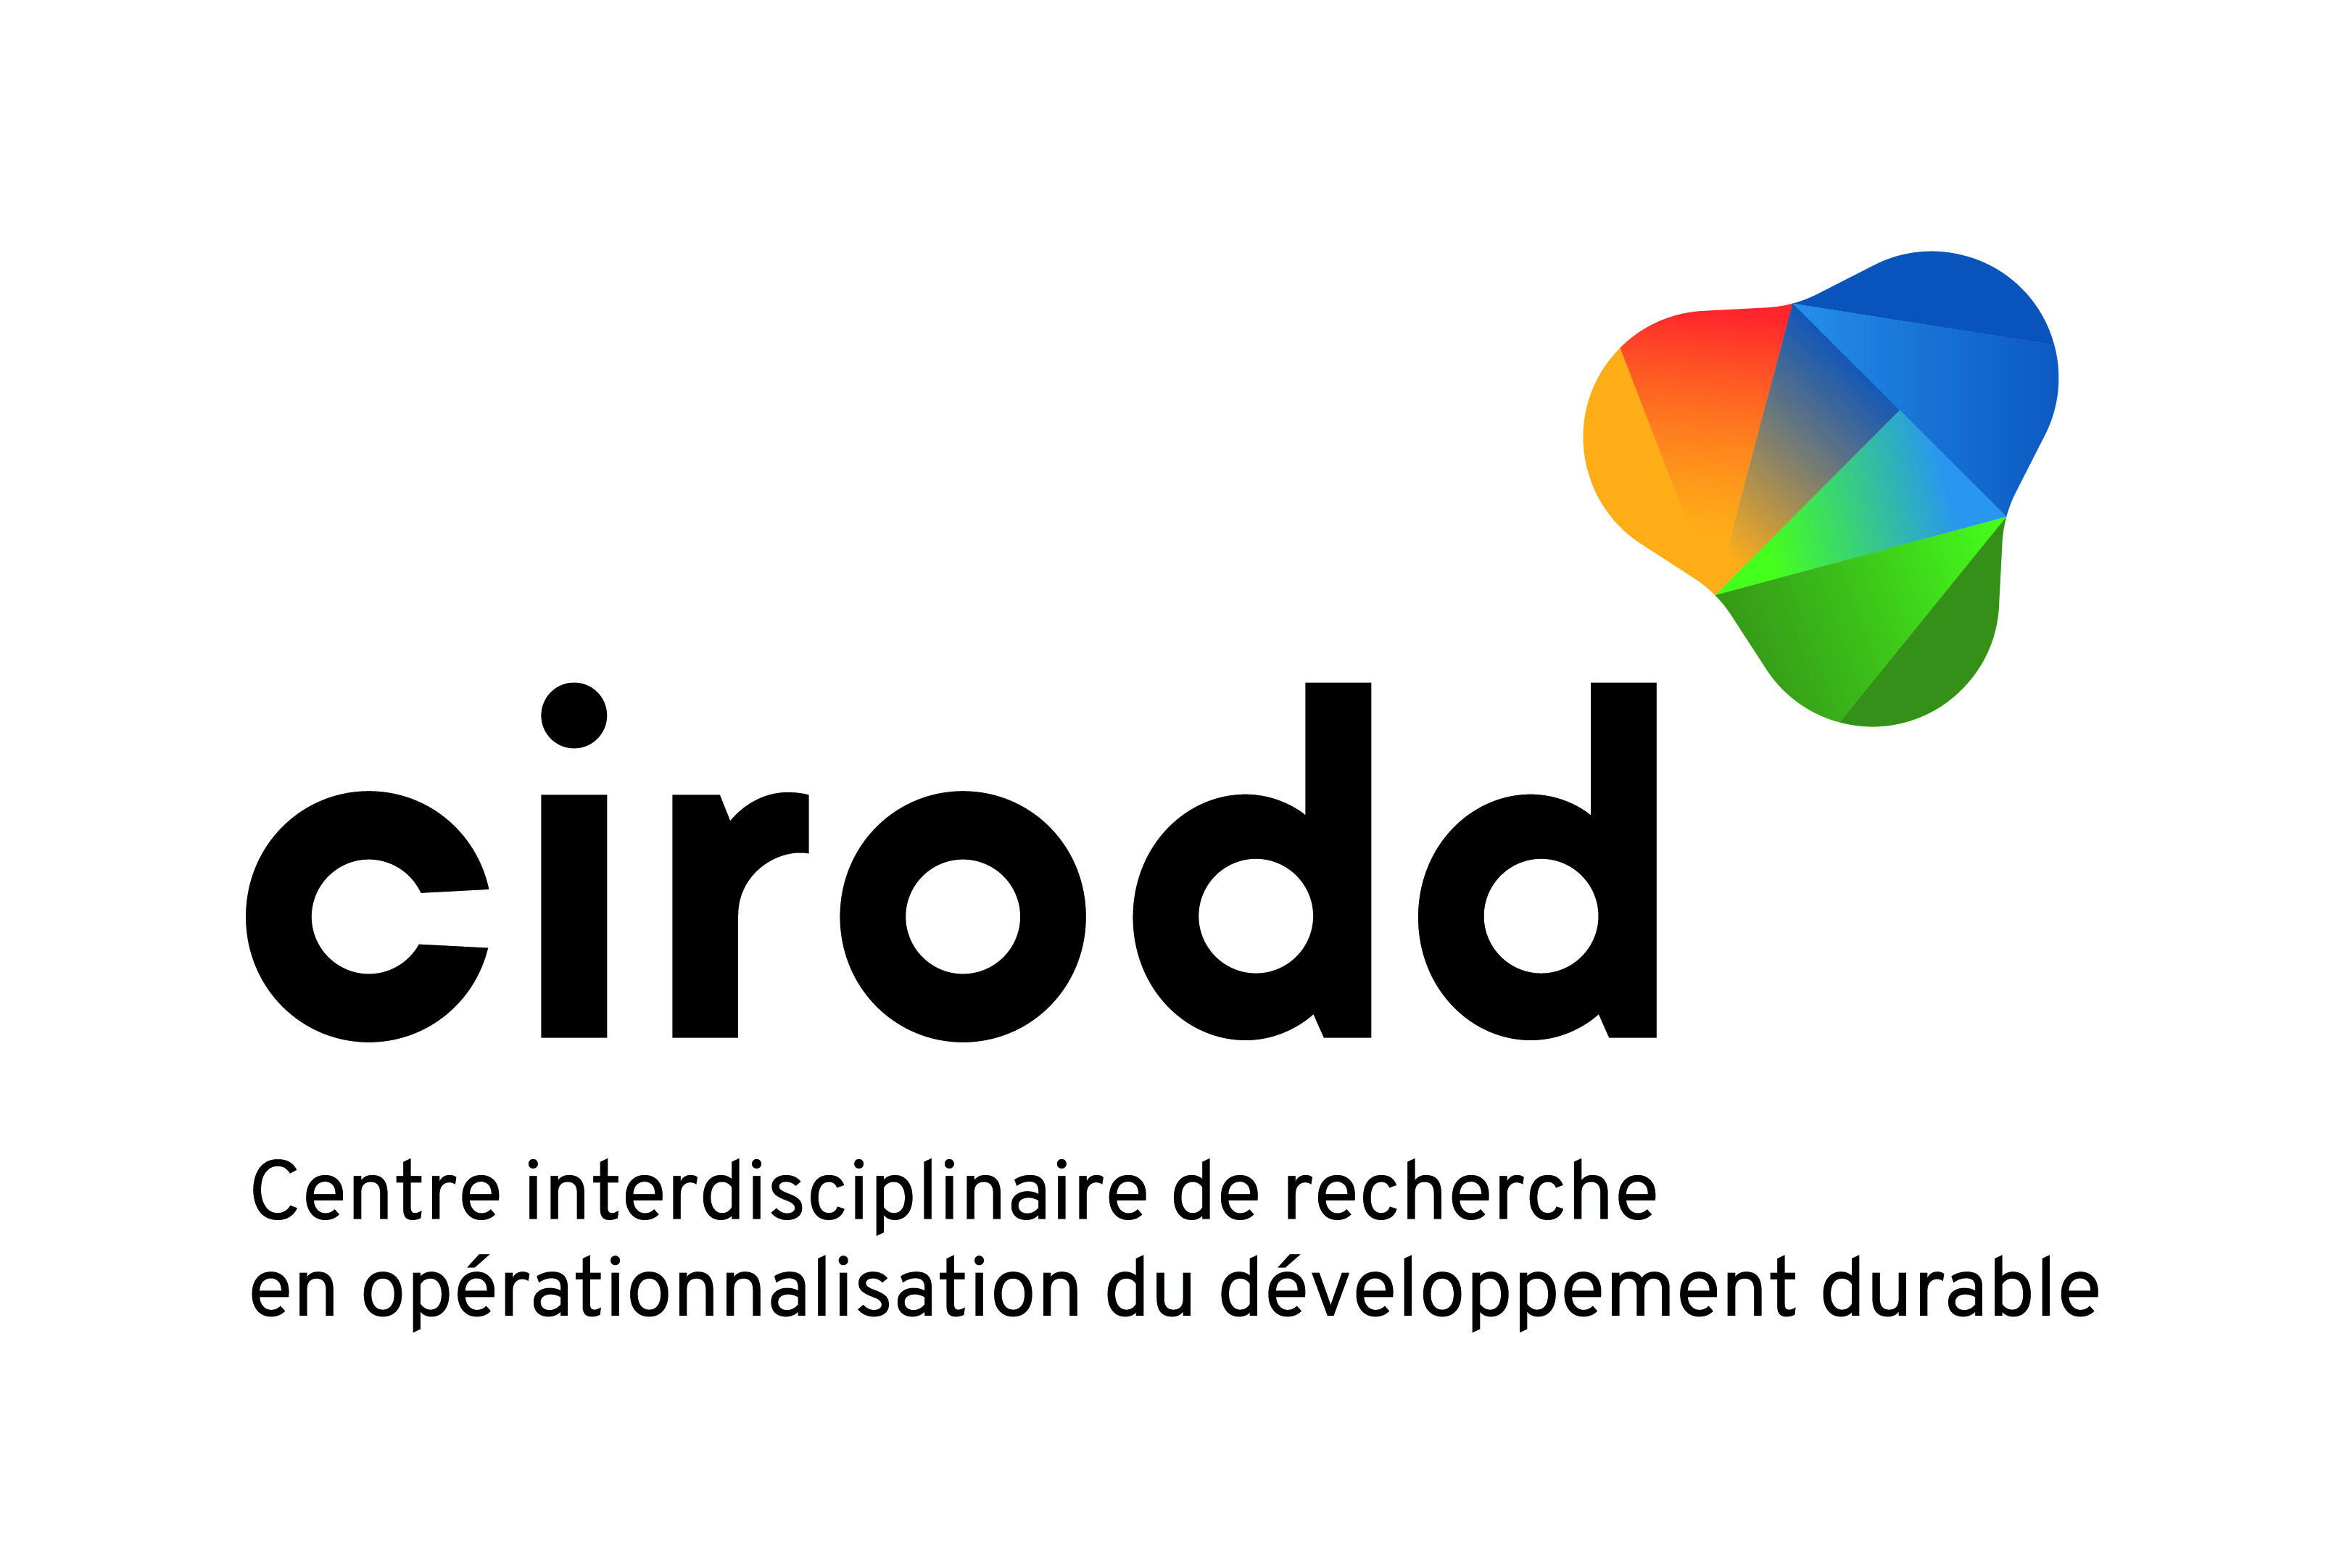 CIRODD logo 2020 RGB MS v1